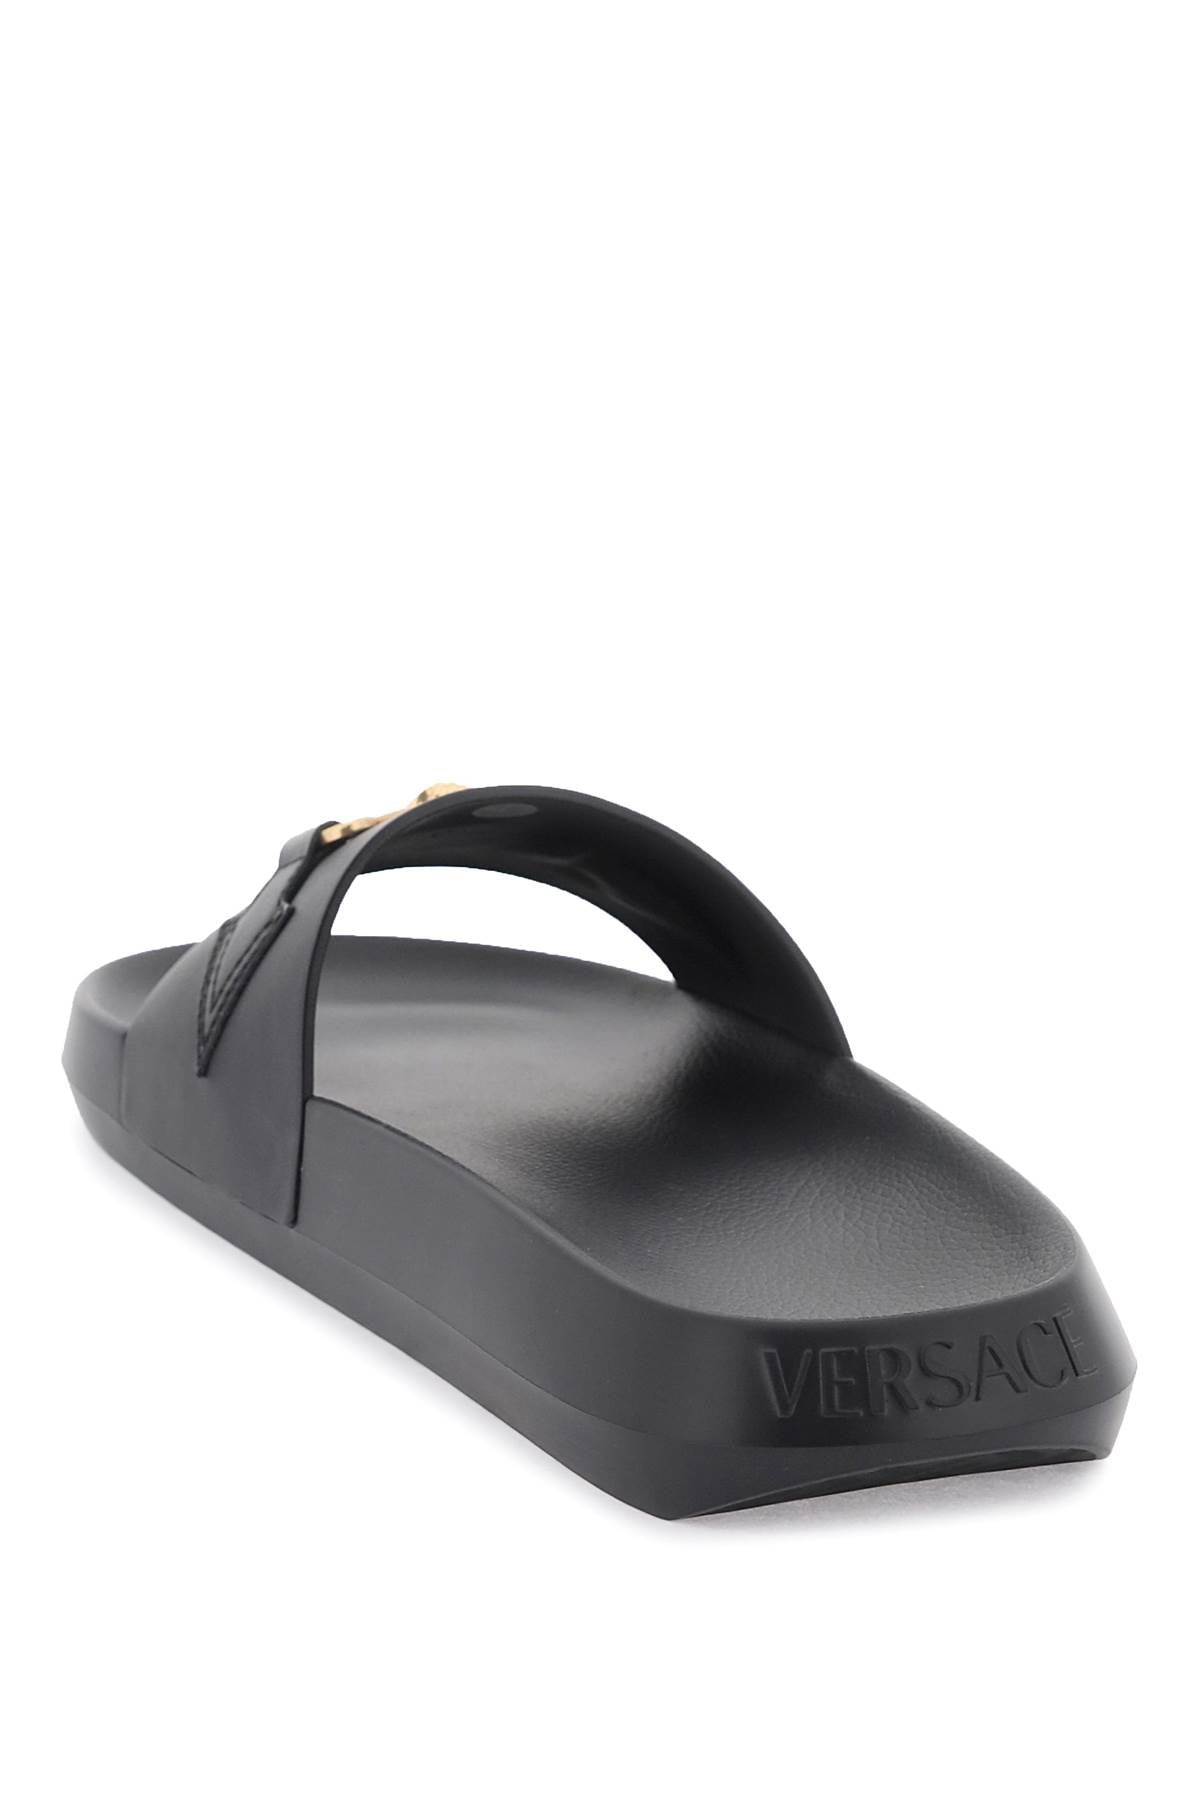 VERSACE MEDUSA BIGGIE Slide Sandals